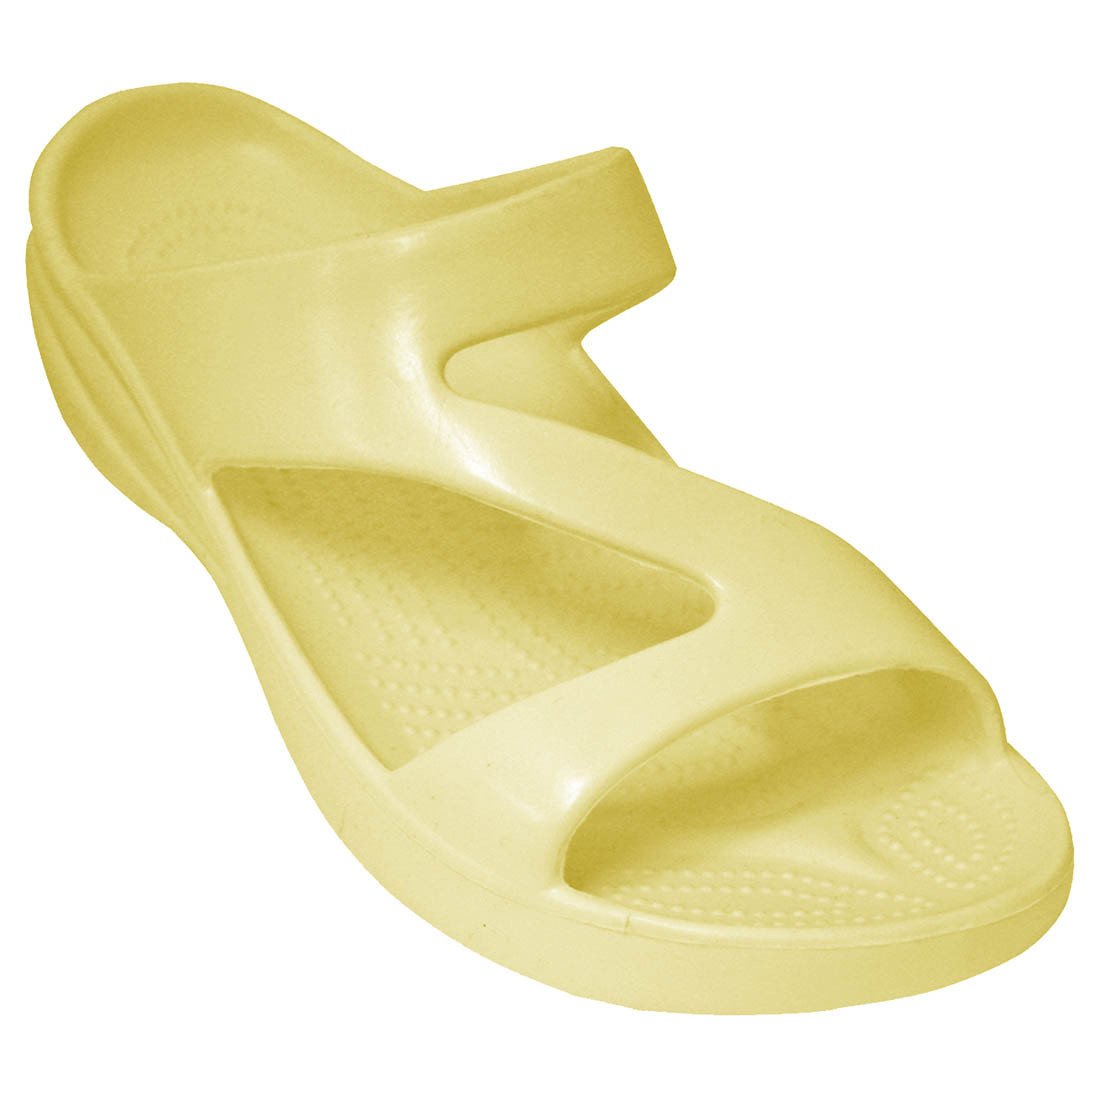 Women's Z Sandals - Yellow by DAWGS USA